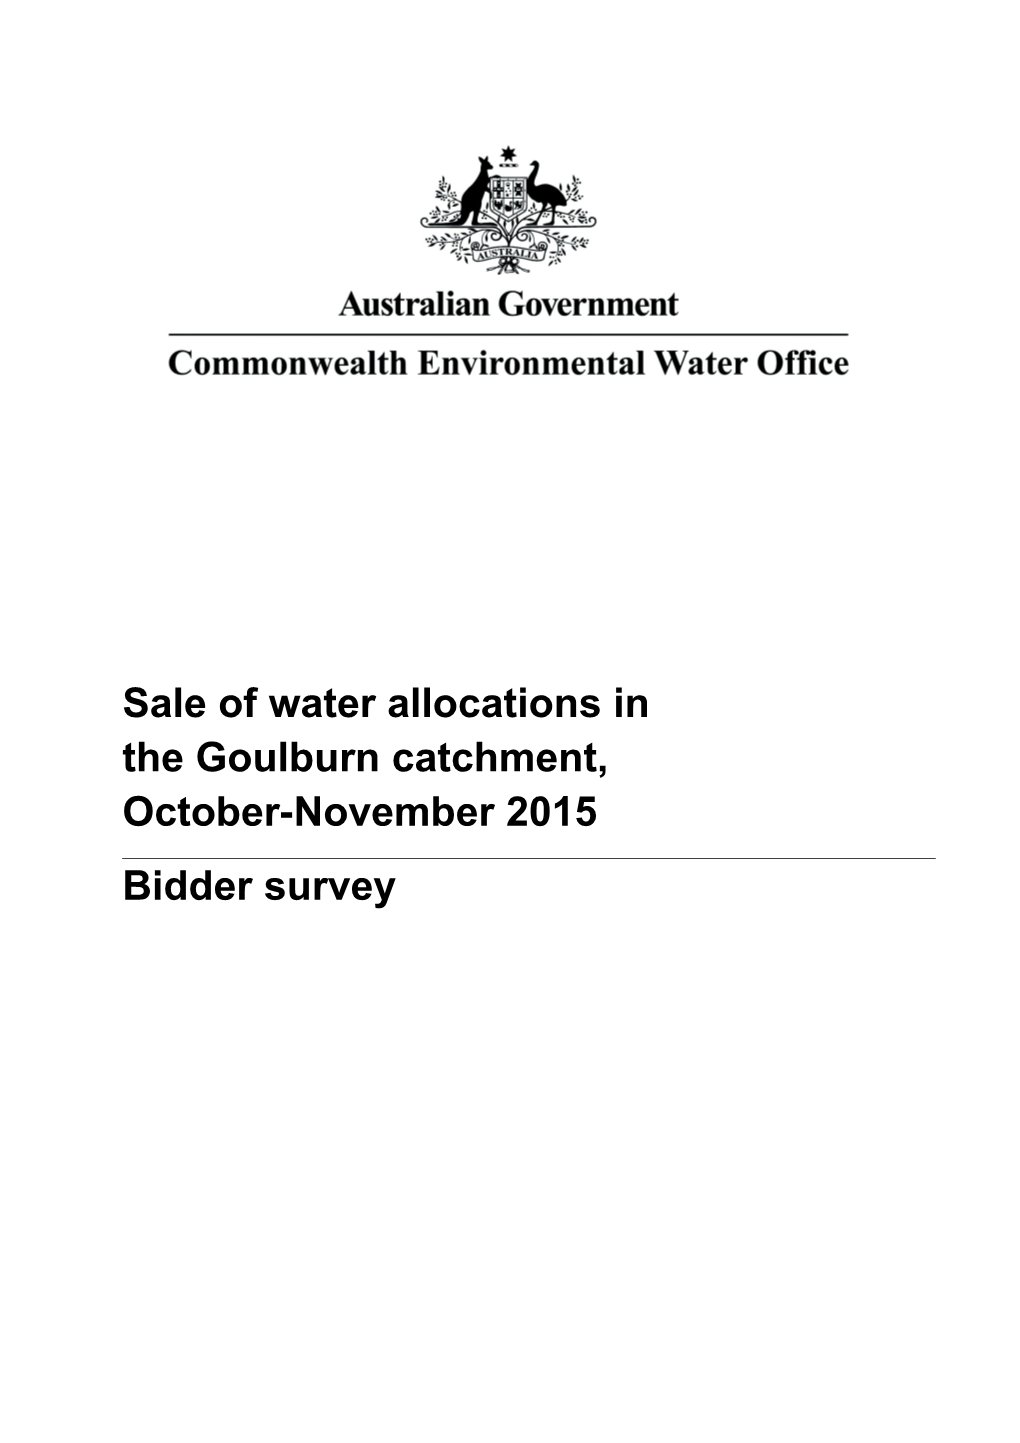 Sale of Water Allocations Inthe Goulburn Catchment, October-November 2015 - Bidder Survey